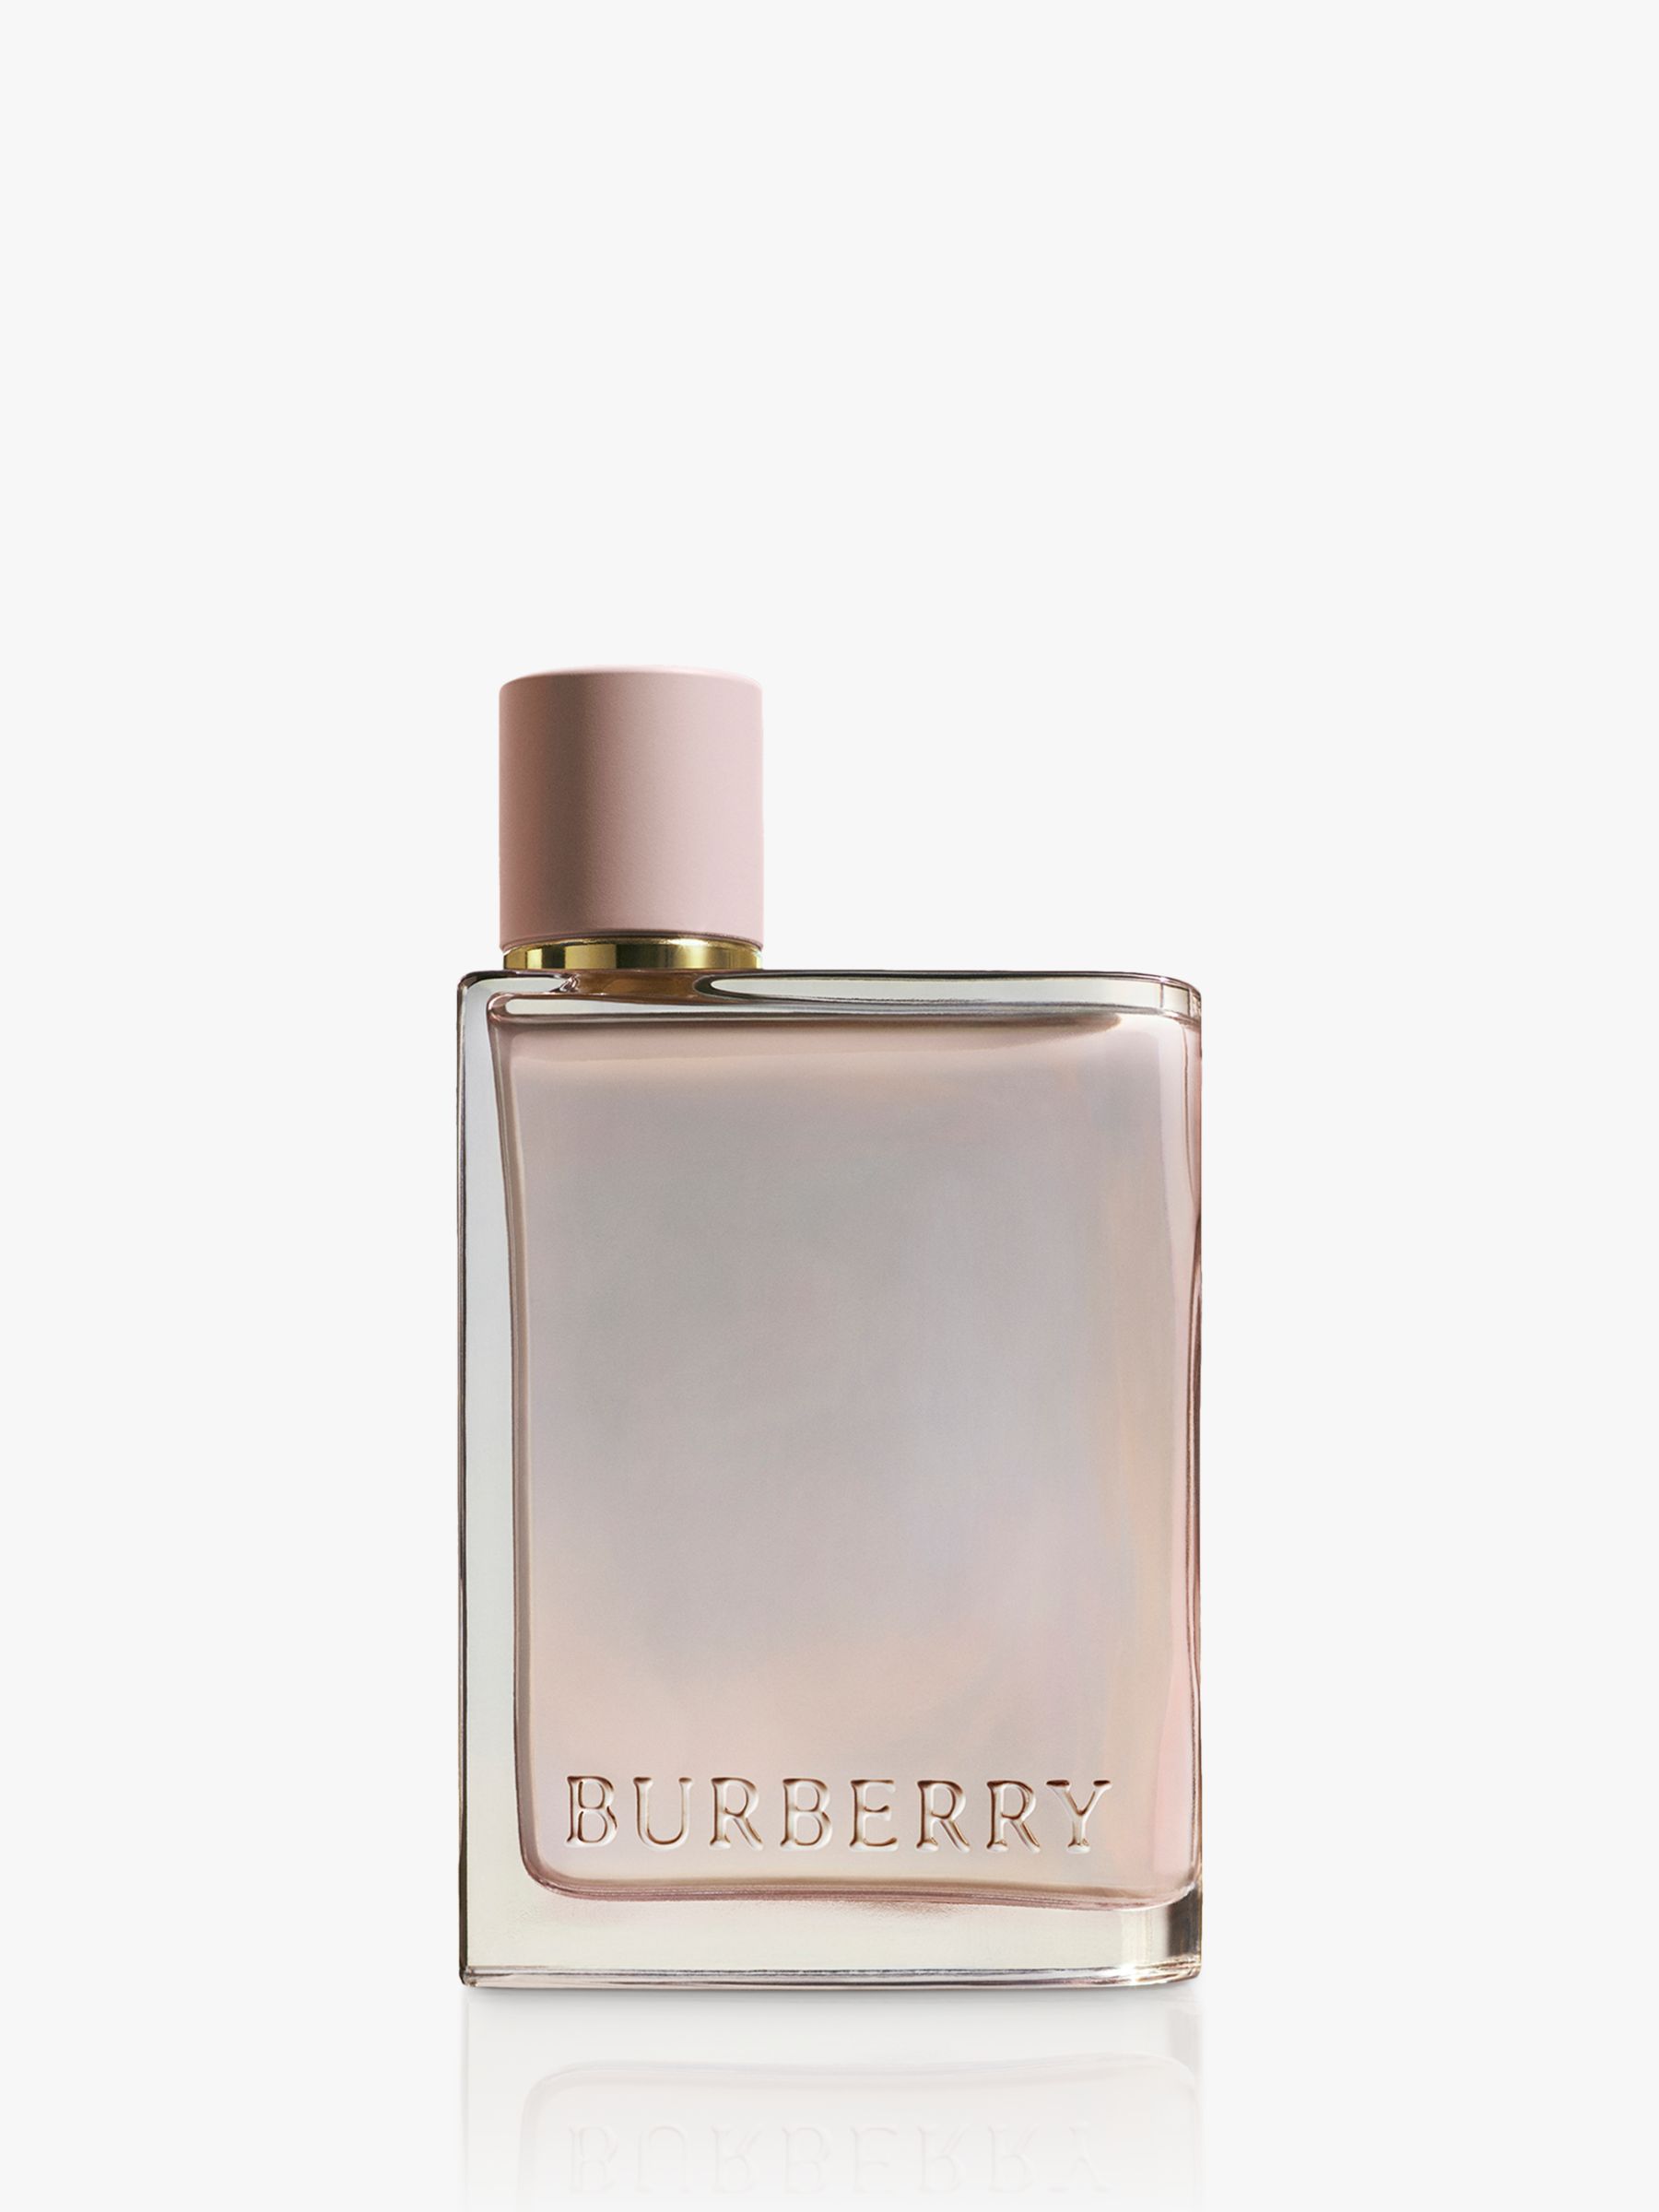 burberry her perfume price